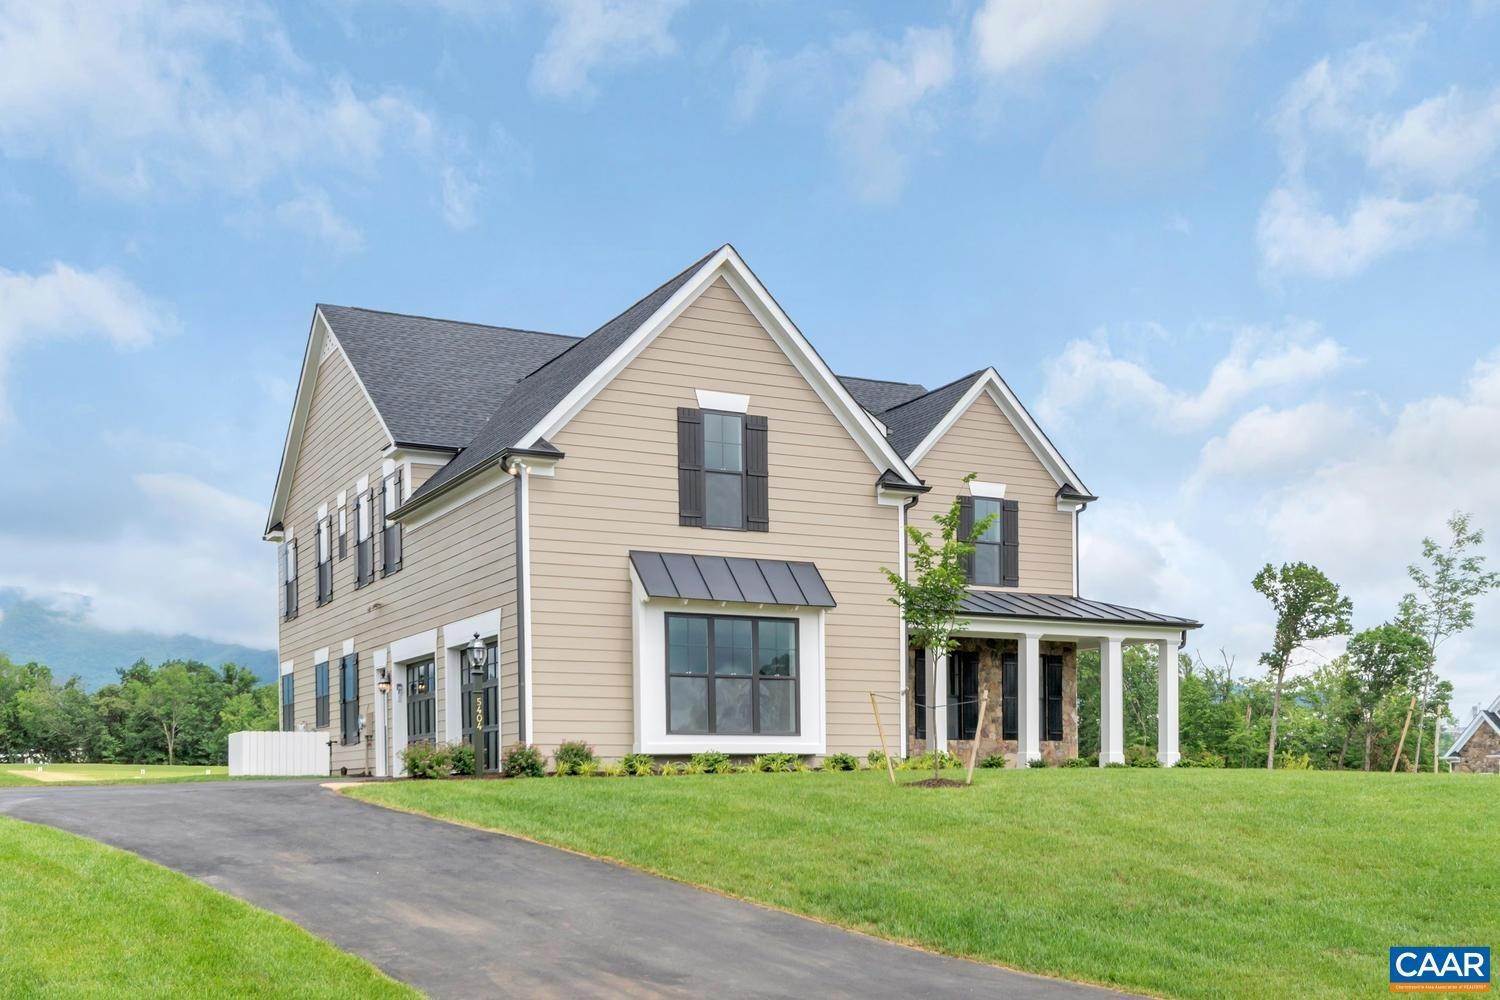 2. Single Family Homes for Sale at 10 CARROLL CREEK RD #B Keswick, Virginia 22947 United States